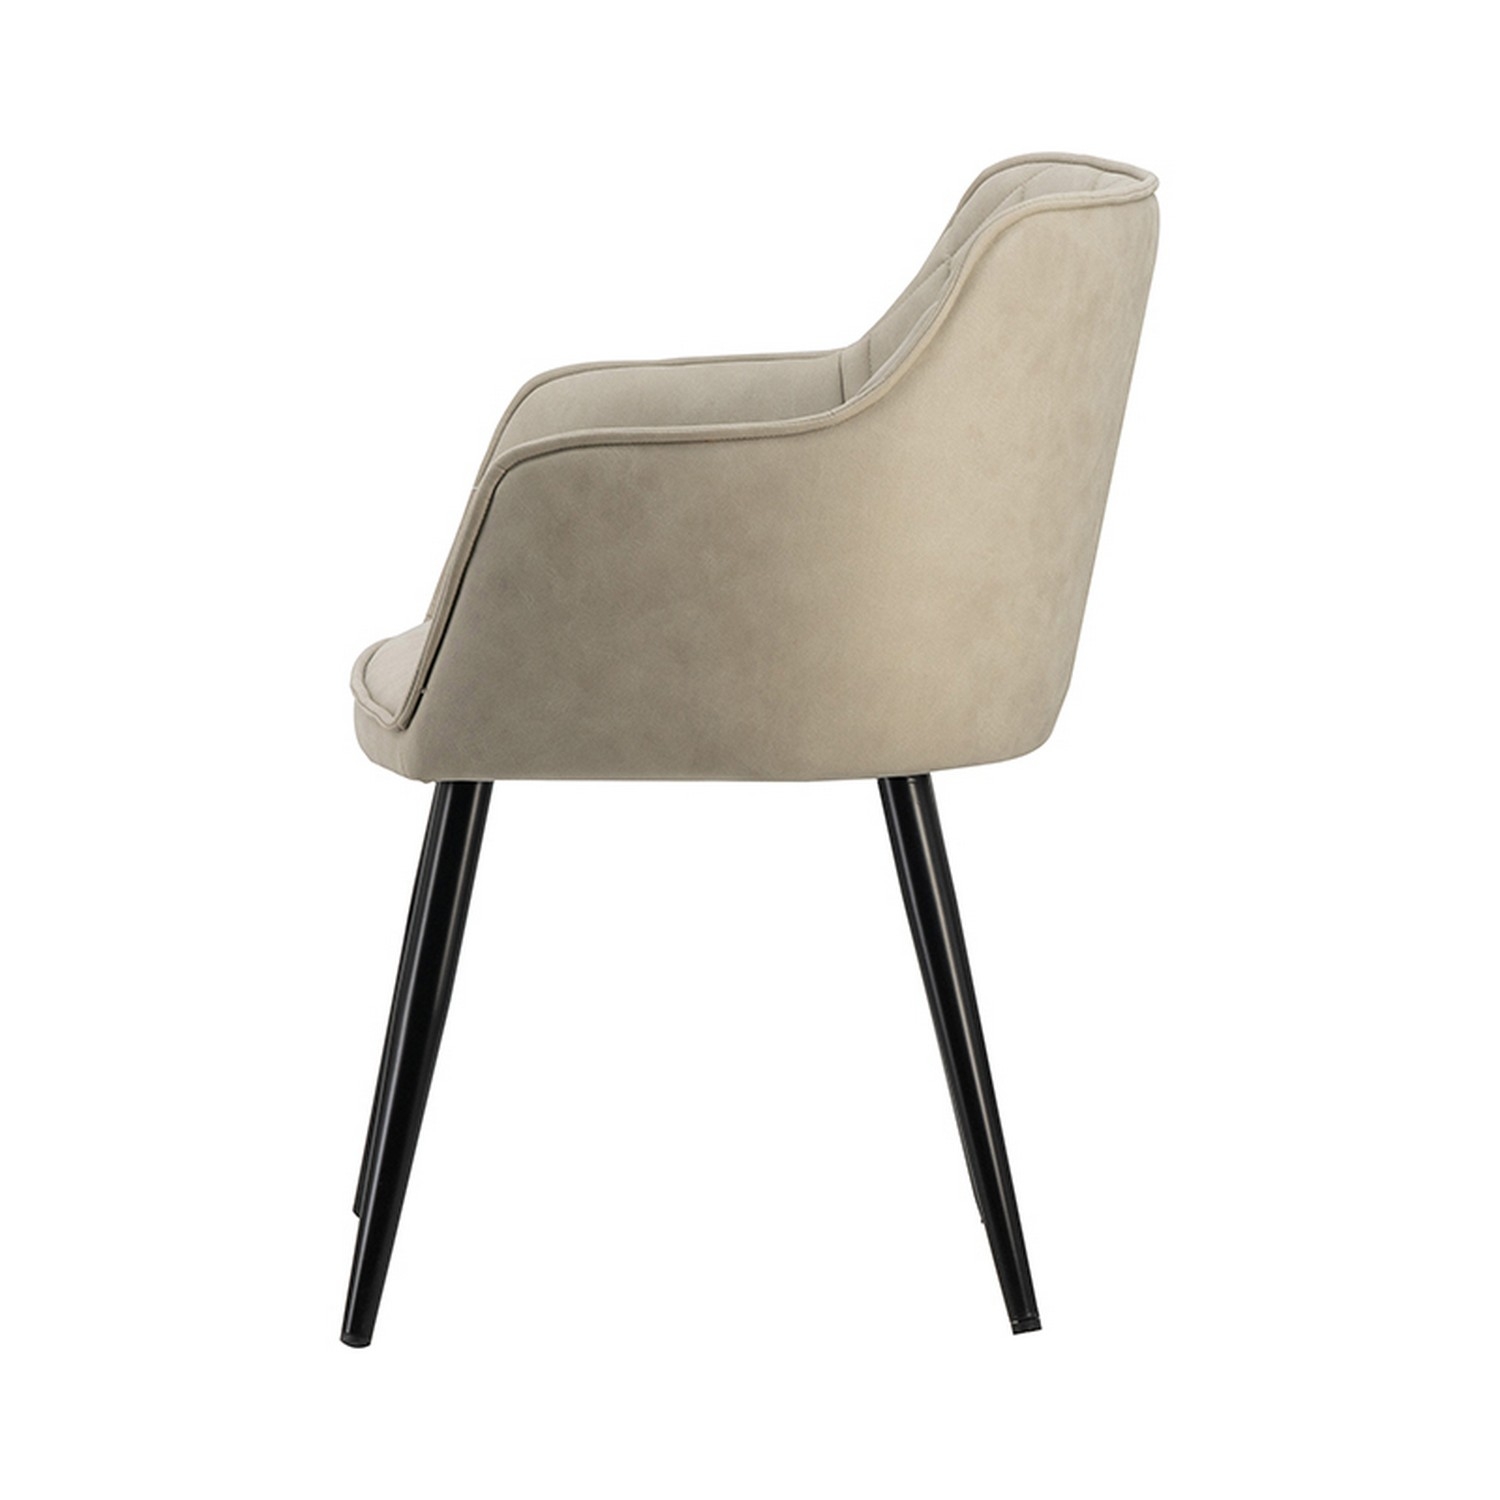 Erin 24 Inch Curved Dining Chair, Beige Fabric, Diamond Pattern Tufting- Saltoro Sherpi